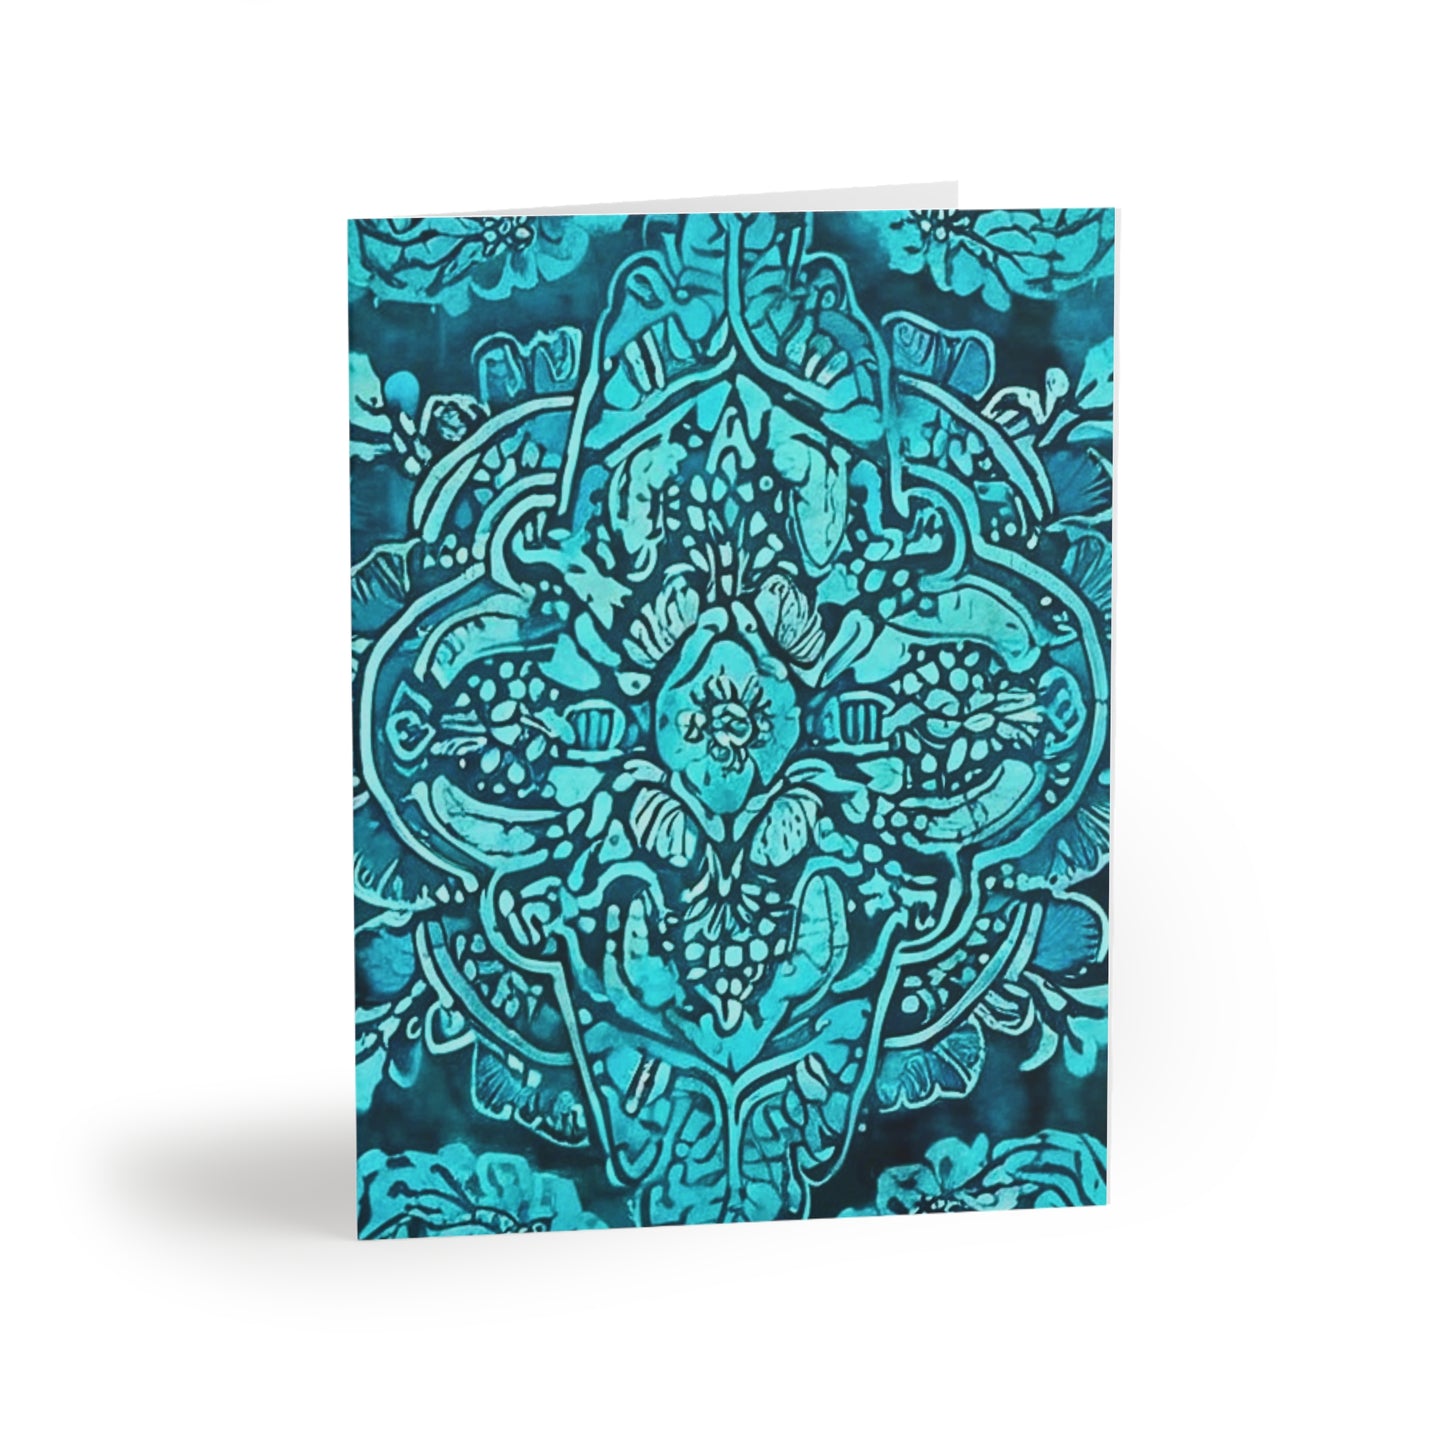 Teal Sumatran Water Garden Batik Decorative Art Note Greeting Cards (8 pcs)